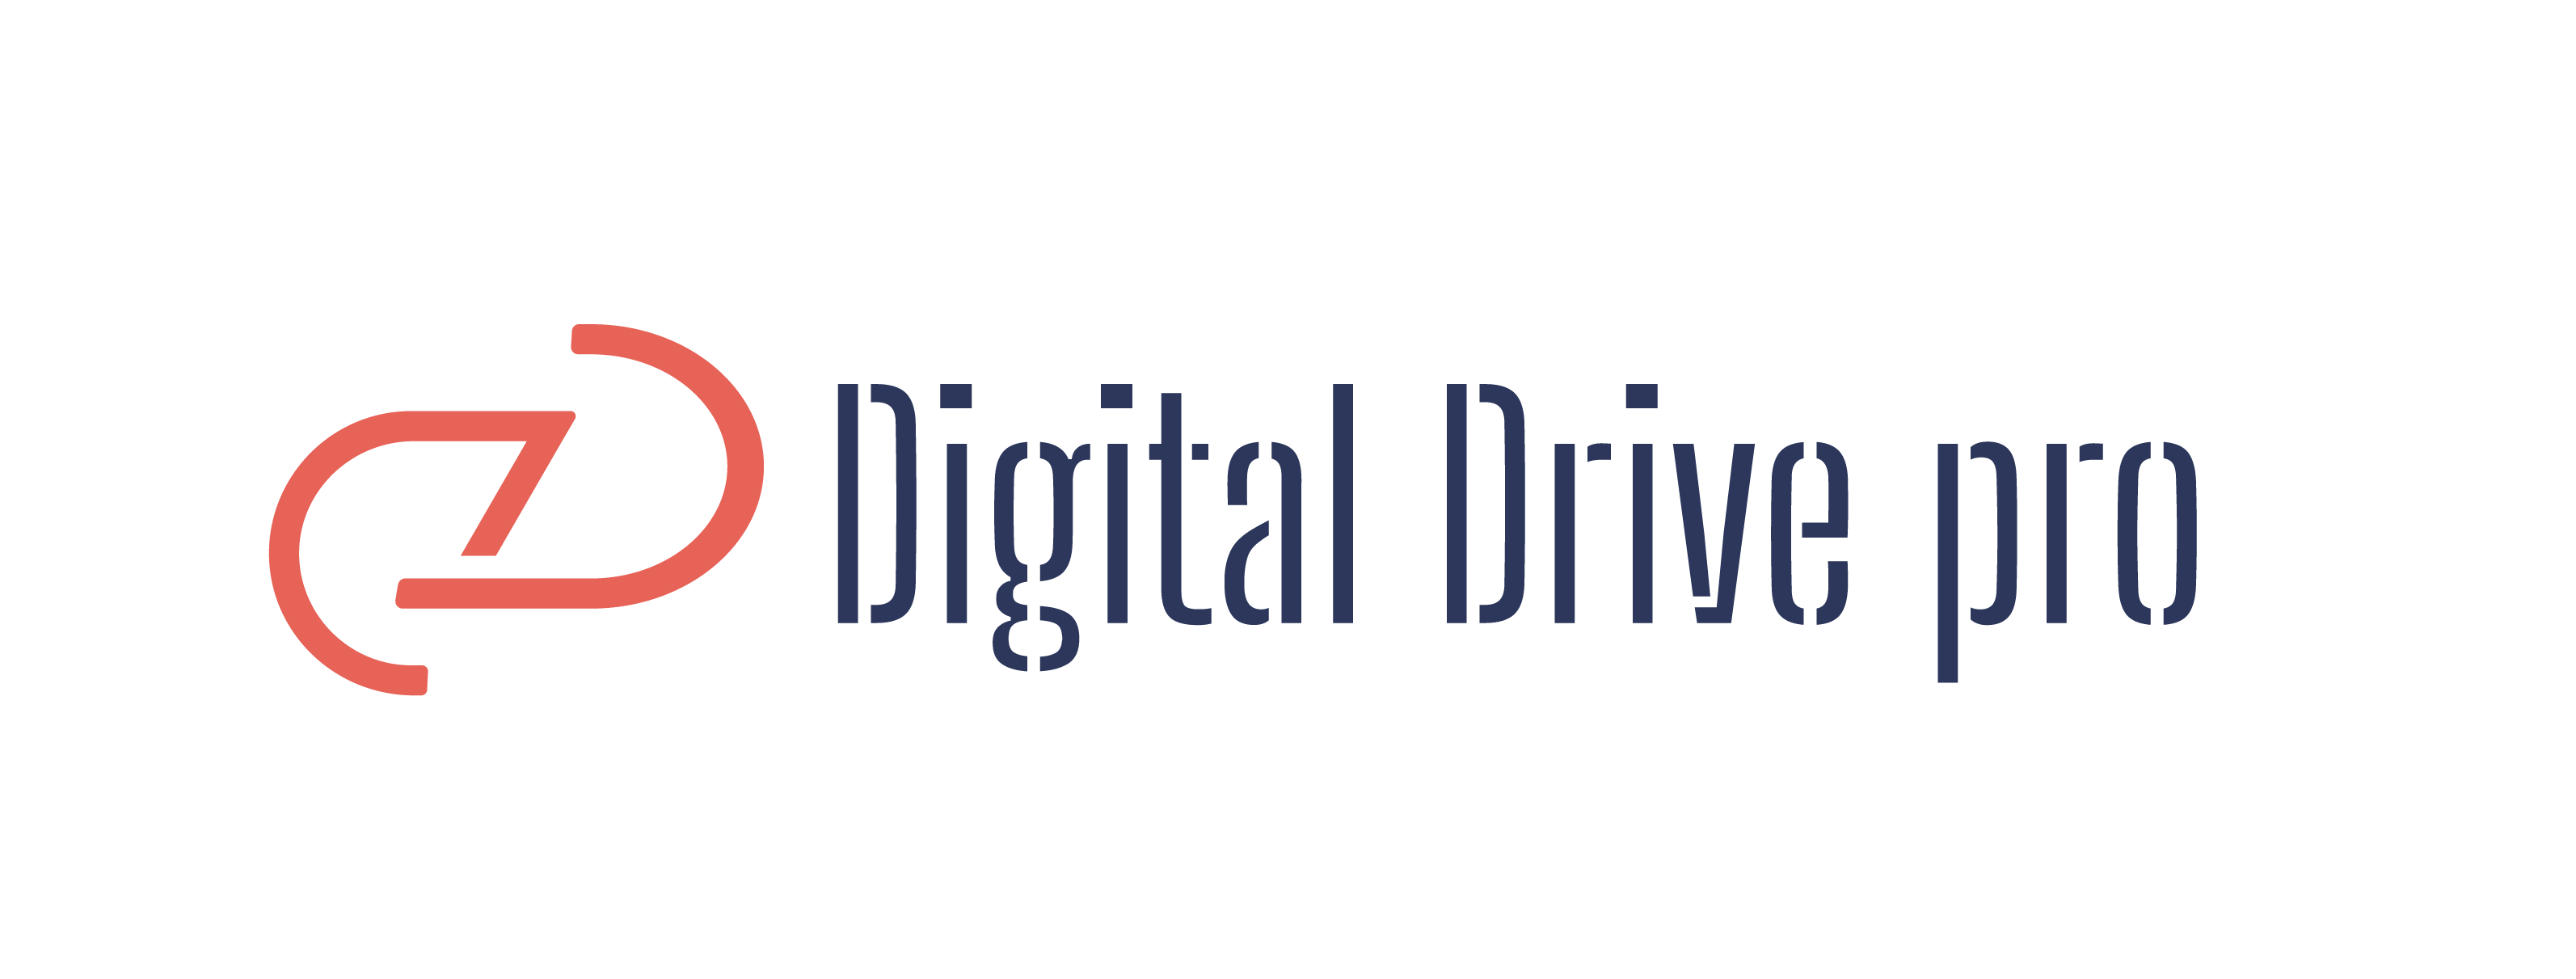 Digital Drive Pro logo